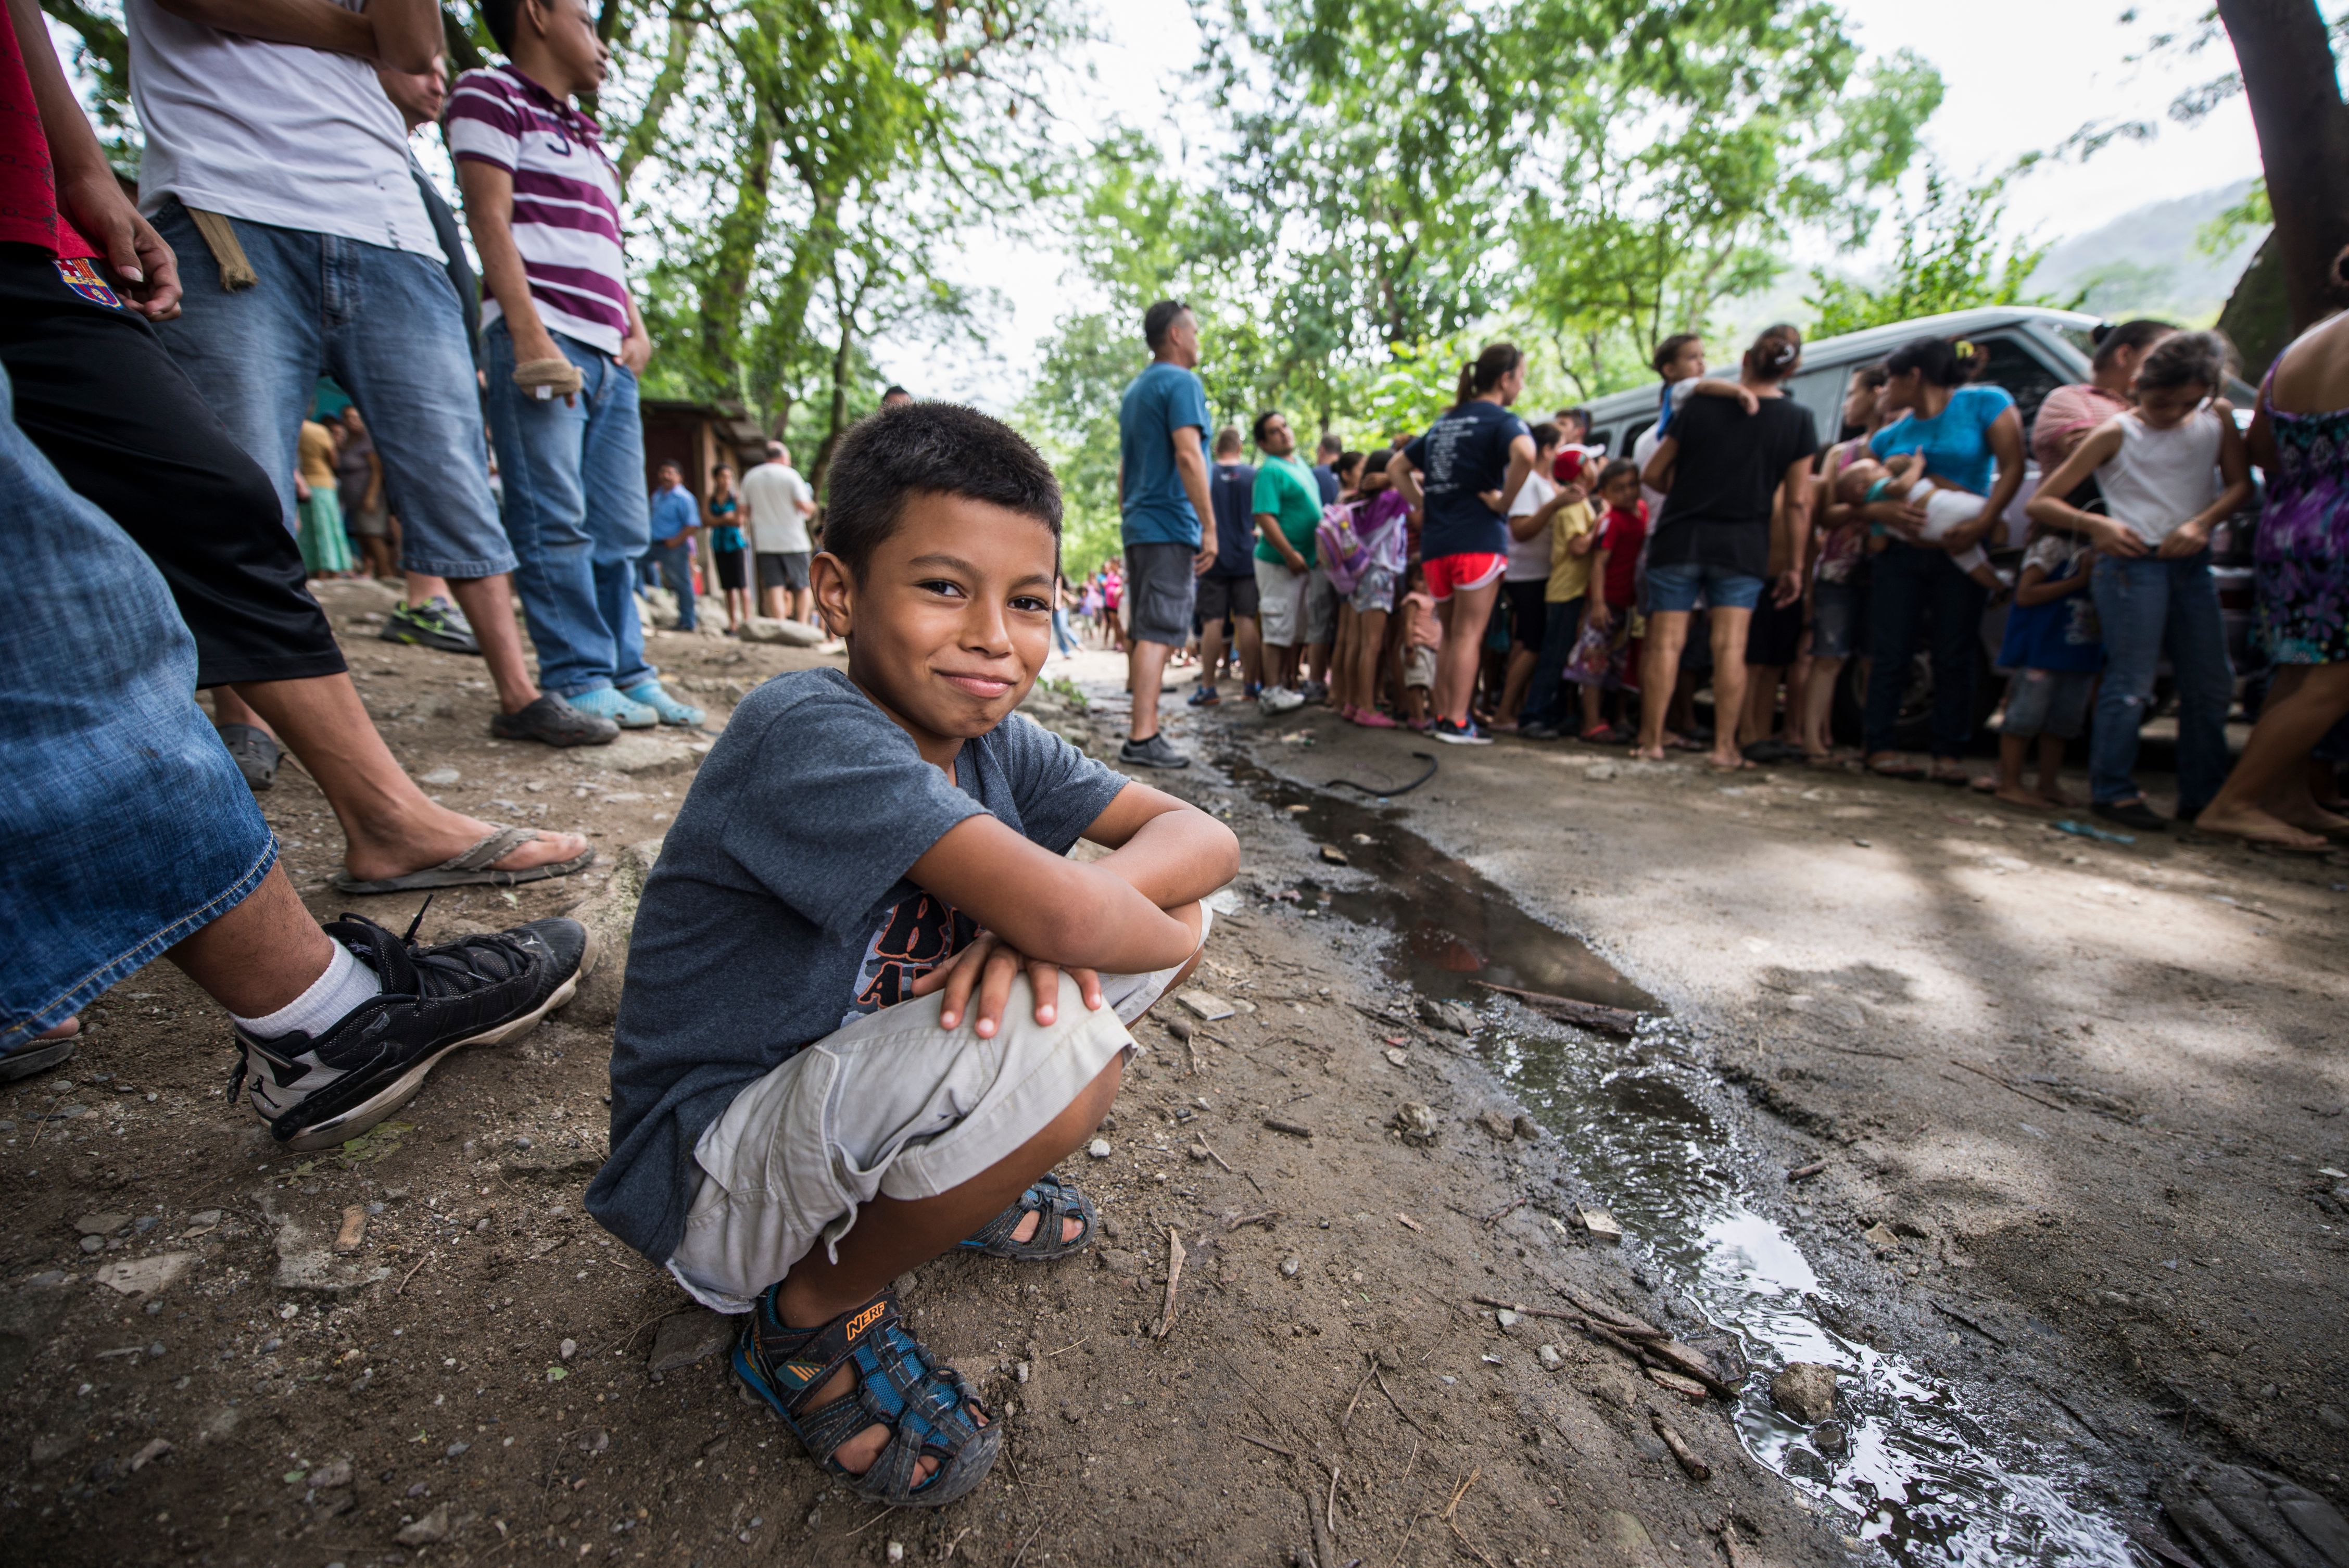 The Children of Honduras…